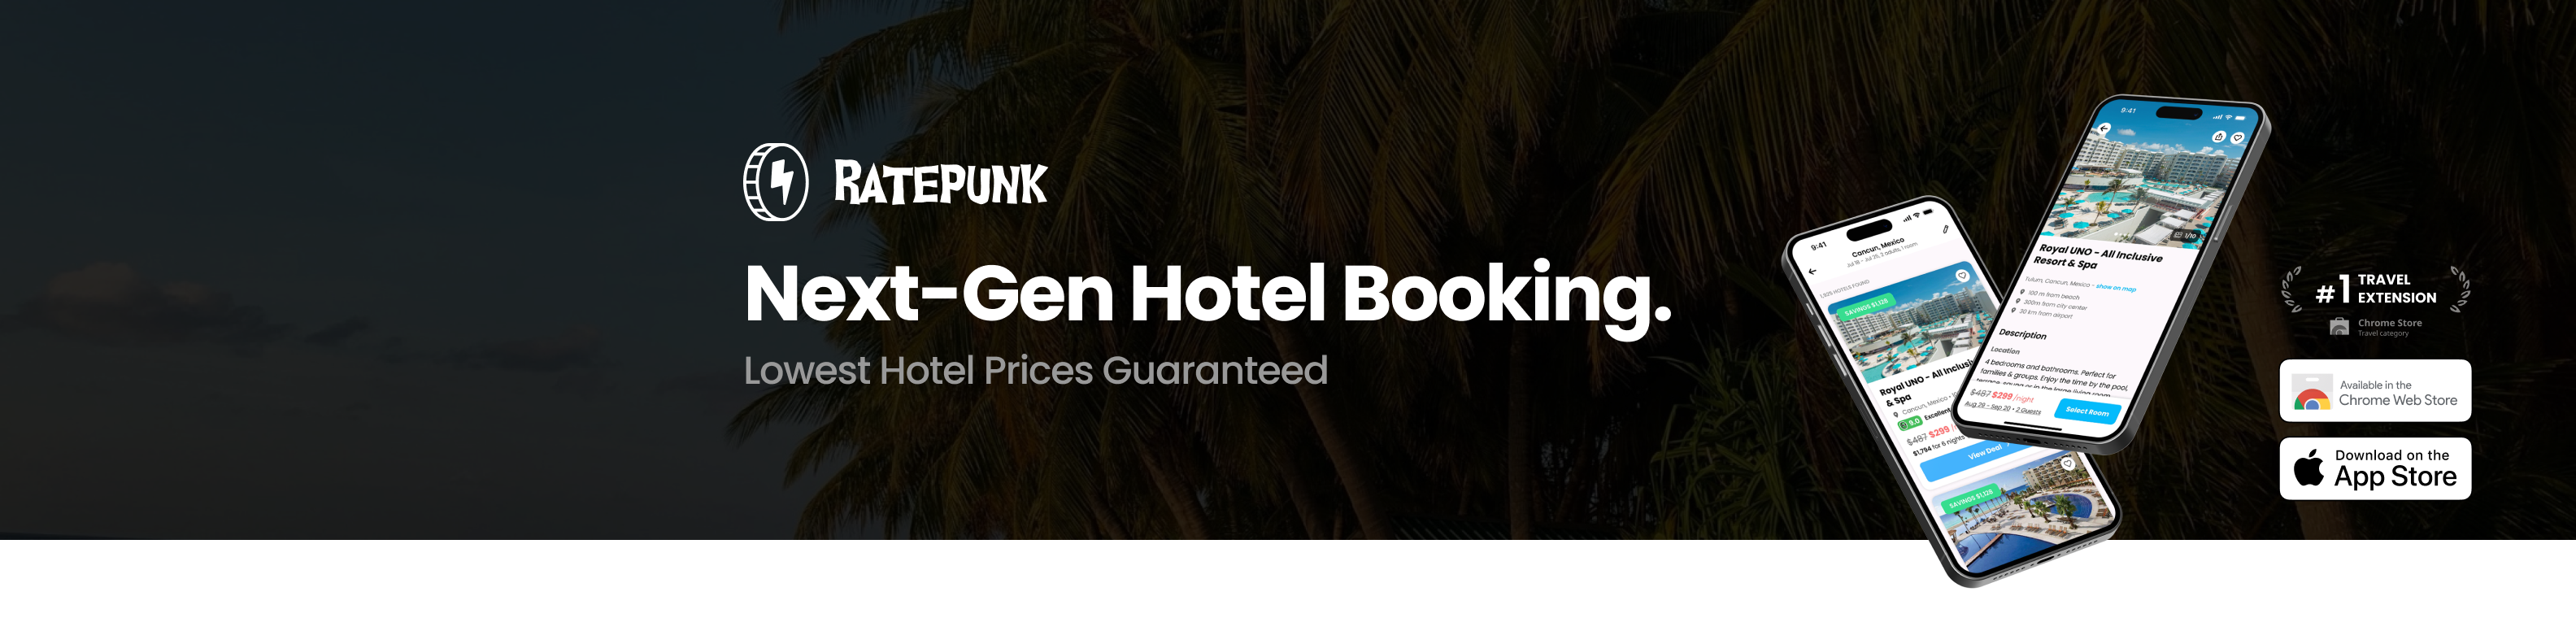 ratepunk- hotel price comparison